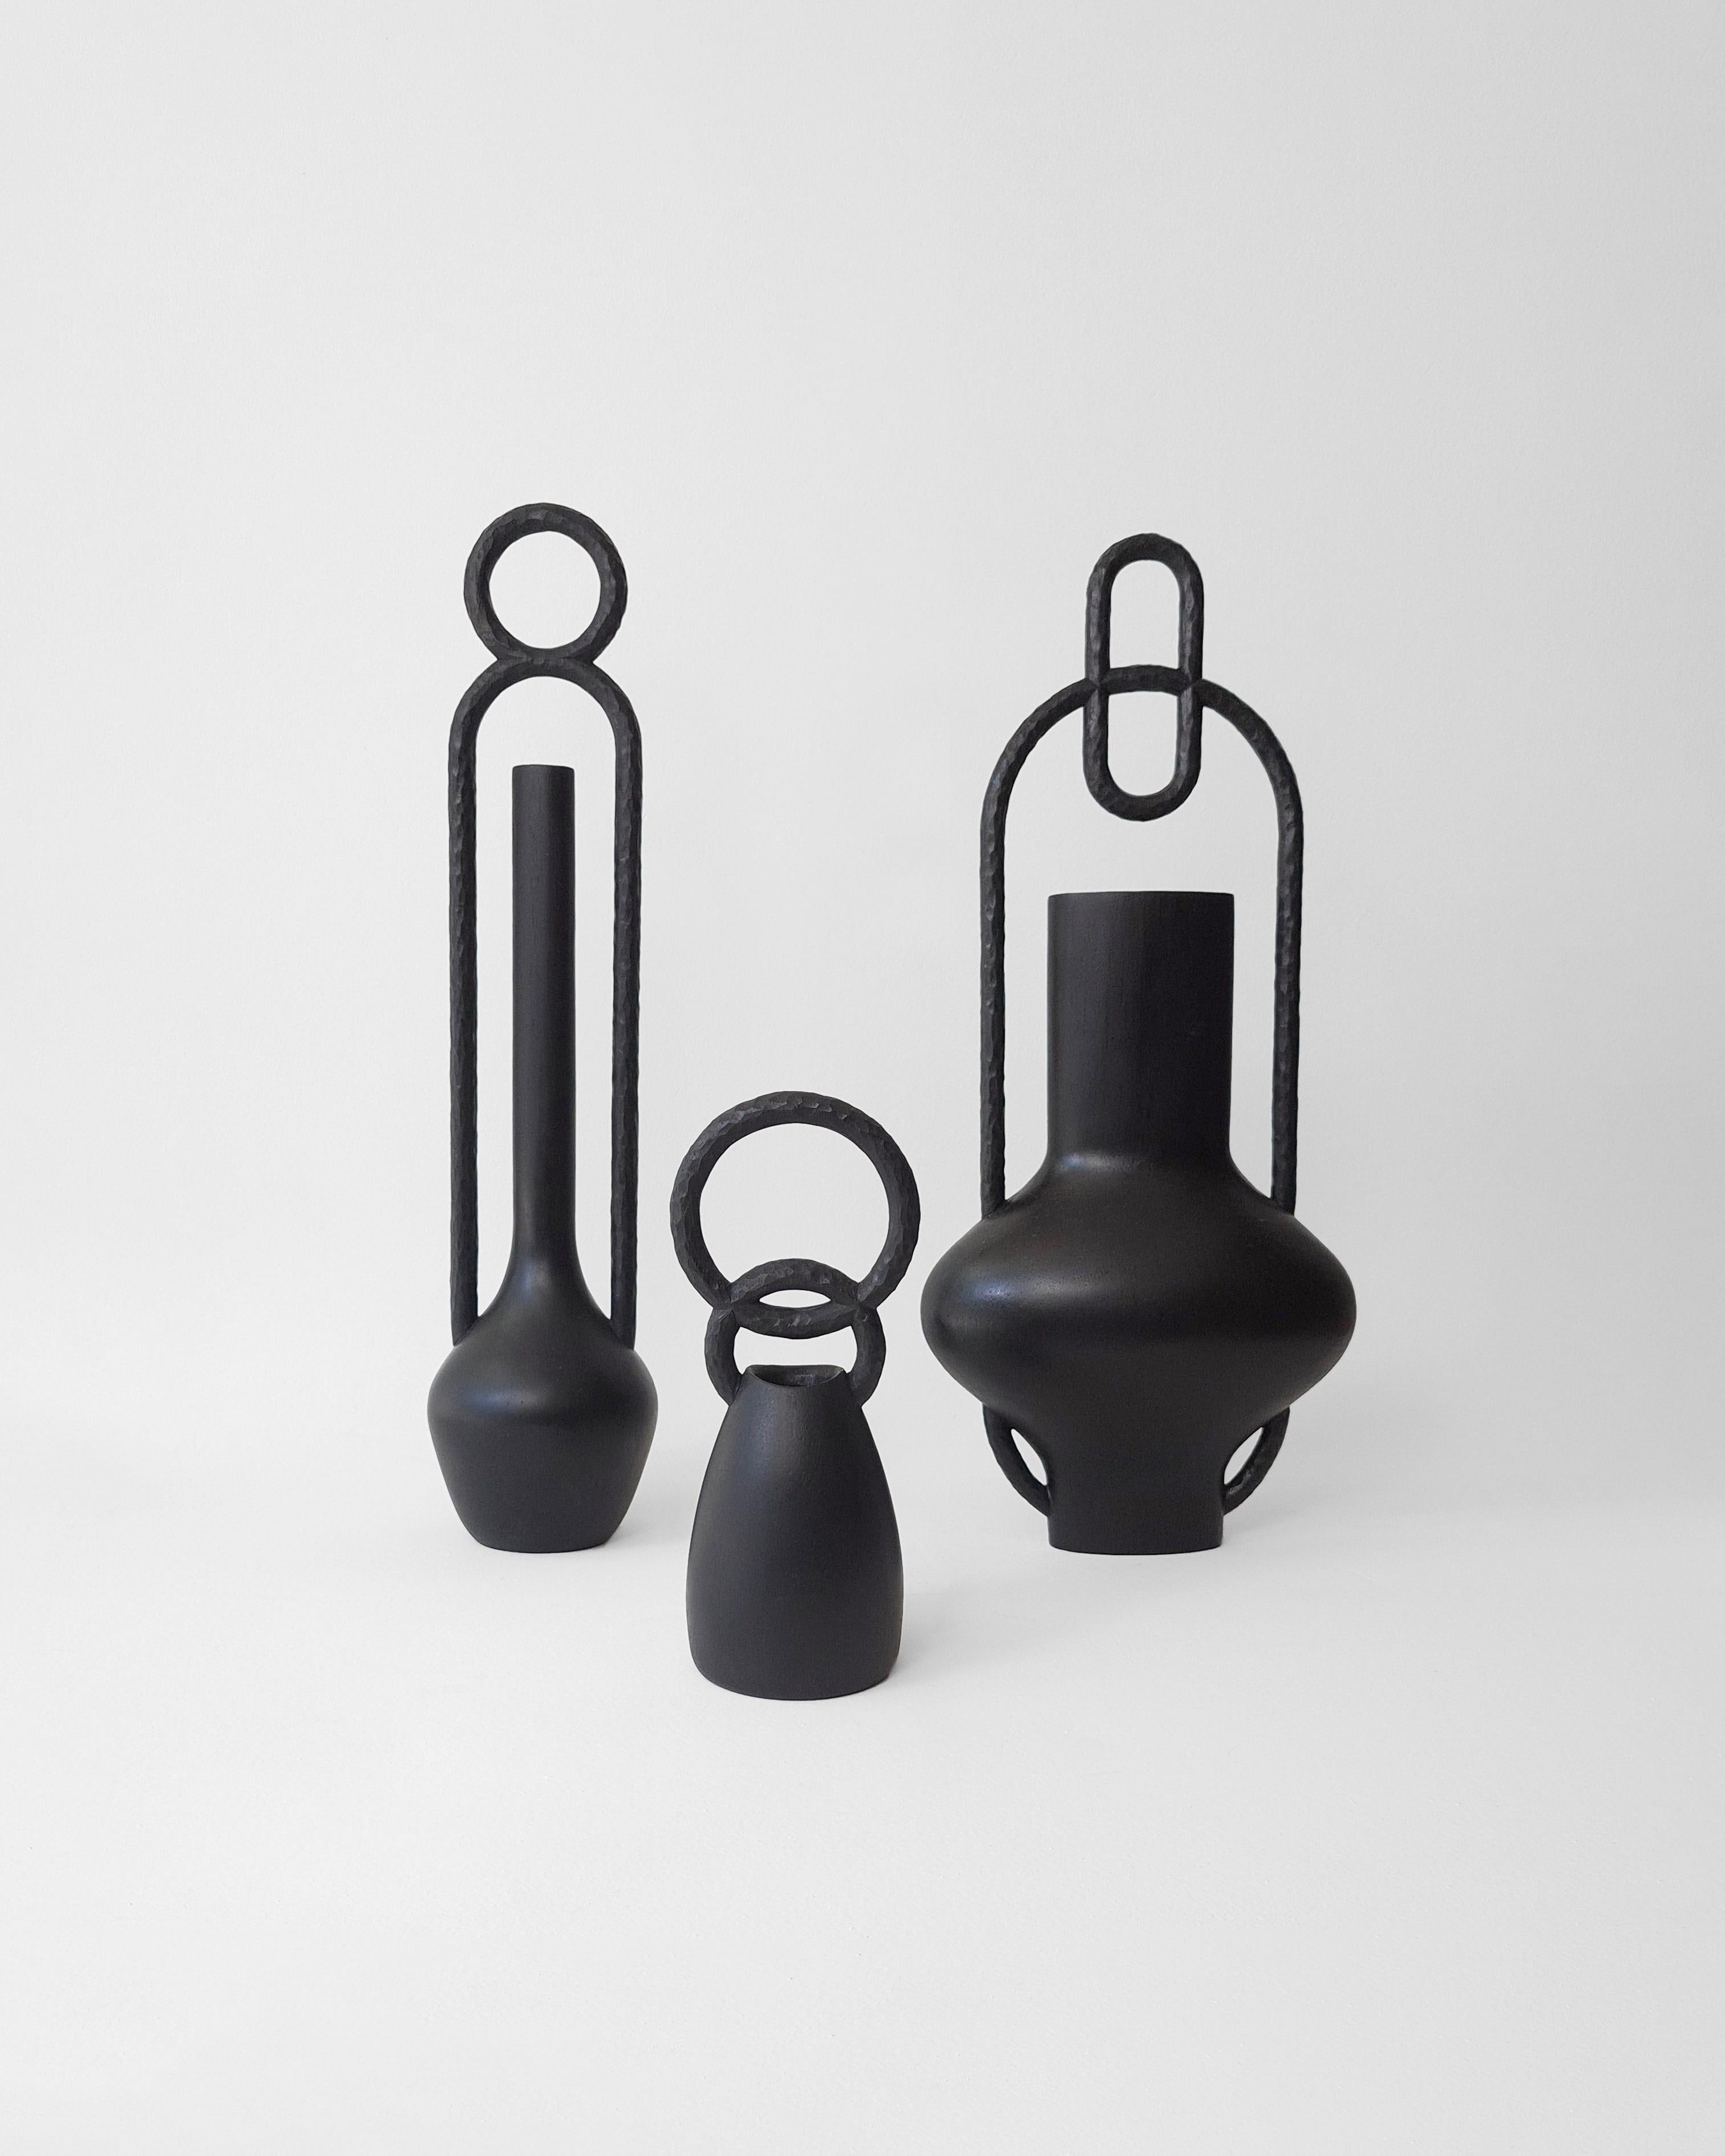 Halo Vase III, Brazilian Contemporary Design, by Estúdio Carmine For Sale 1